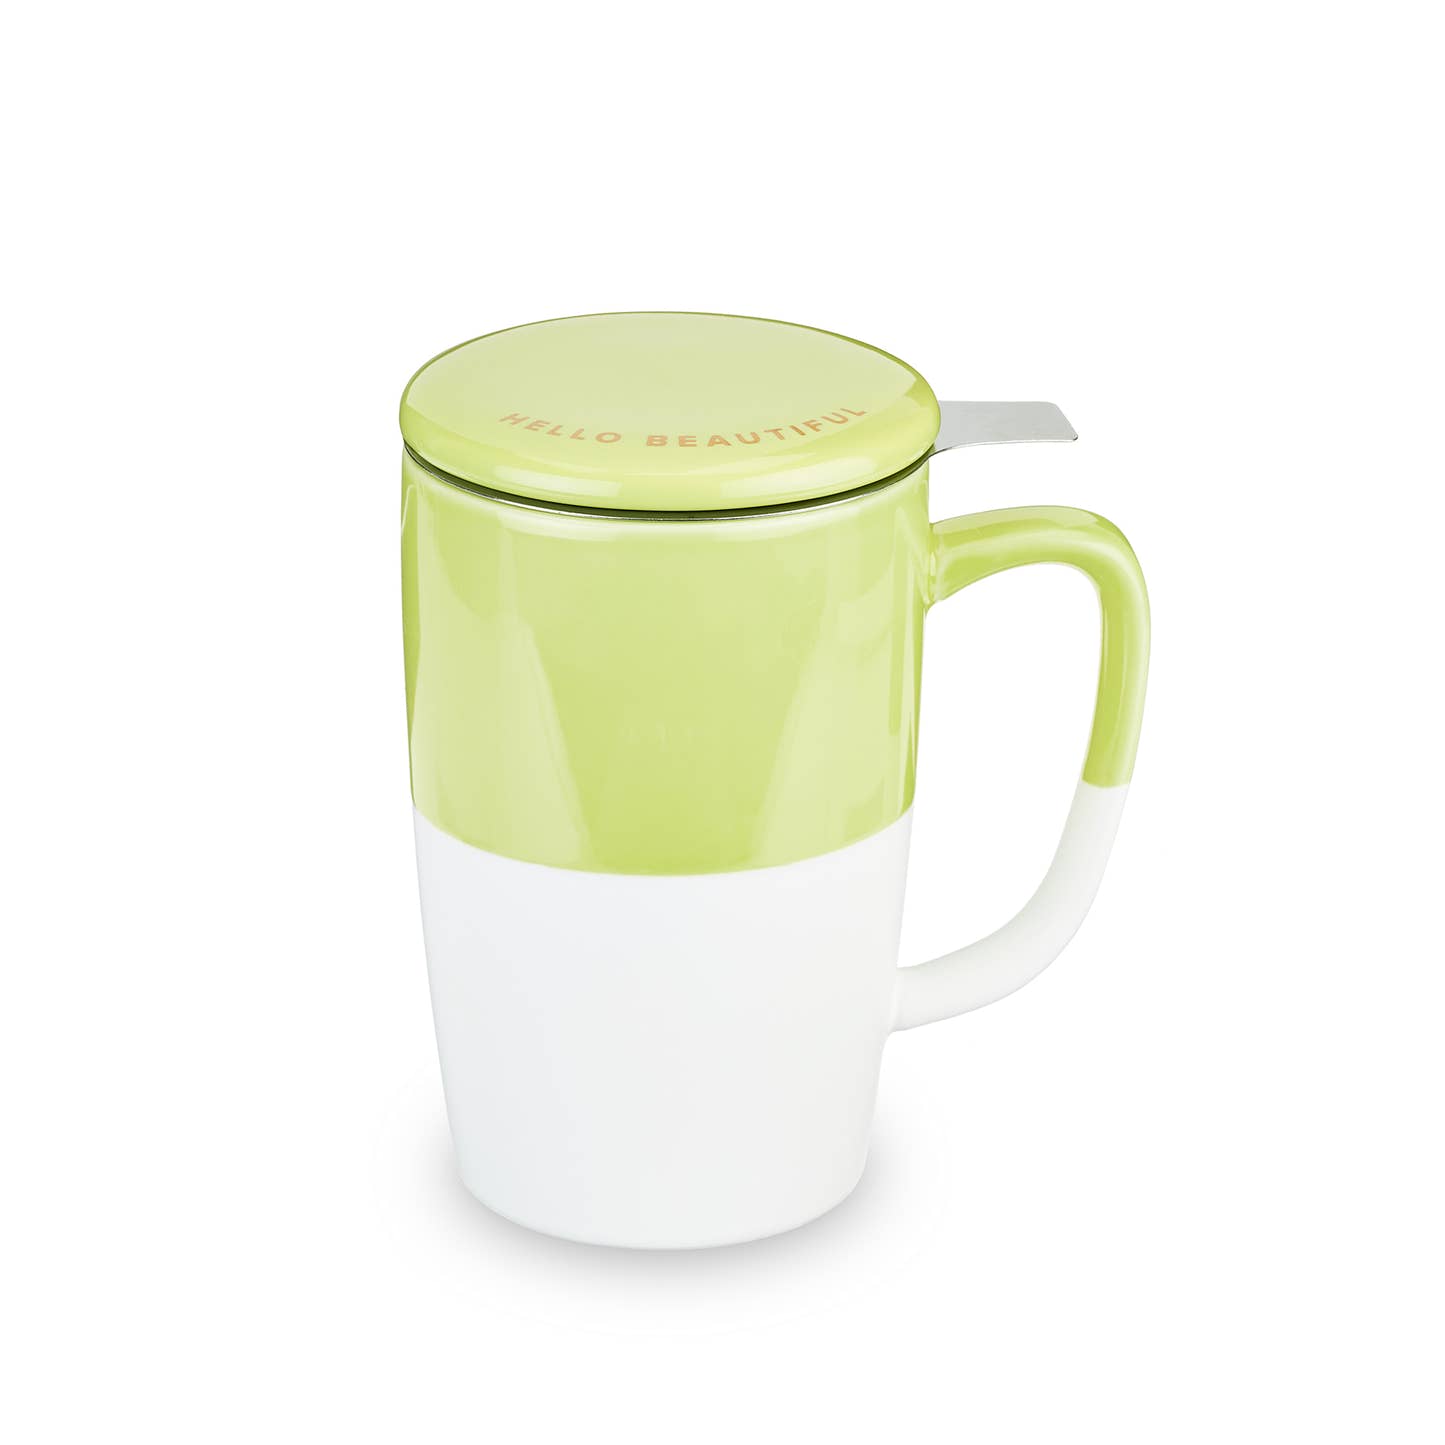 Morning Tea Mug with Infuser